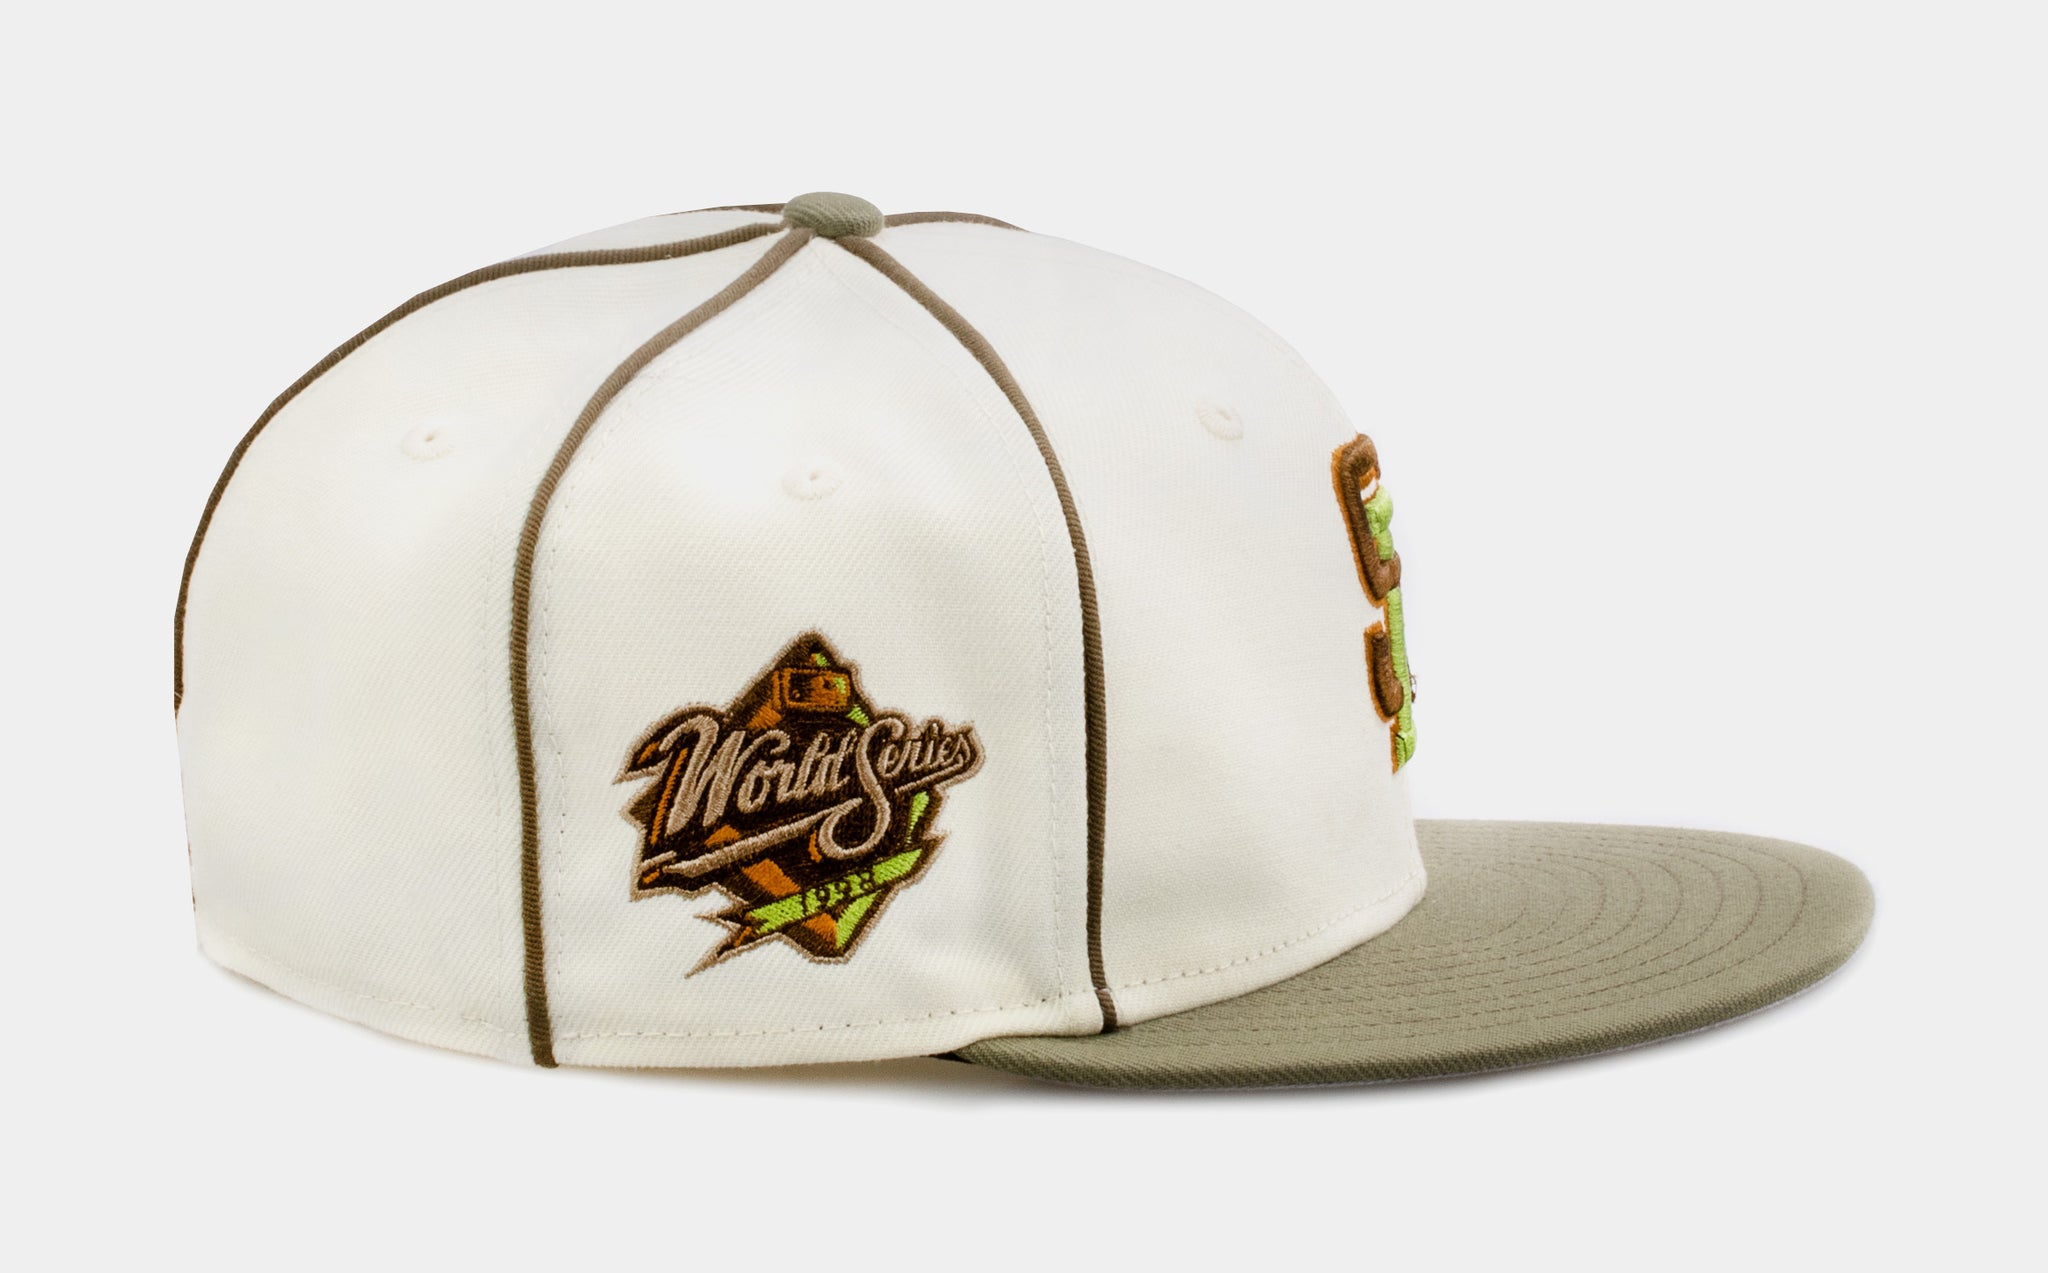 Men's San Diego Padres New Era Camo Trucker 9FIFTY Snapback Hat